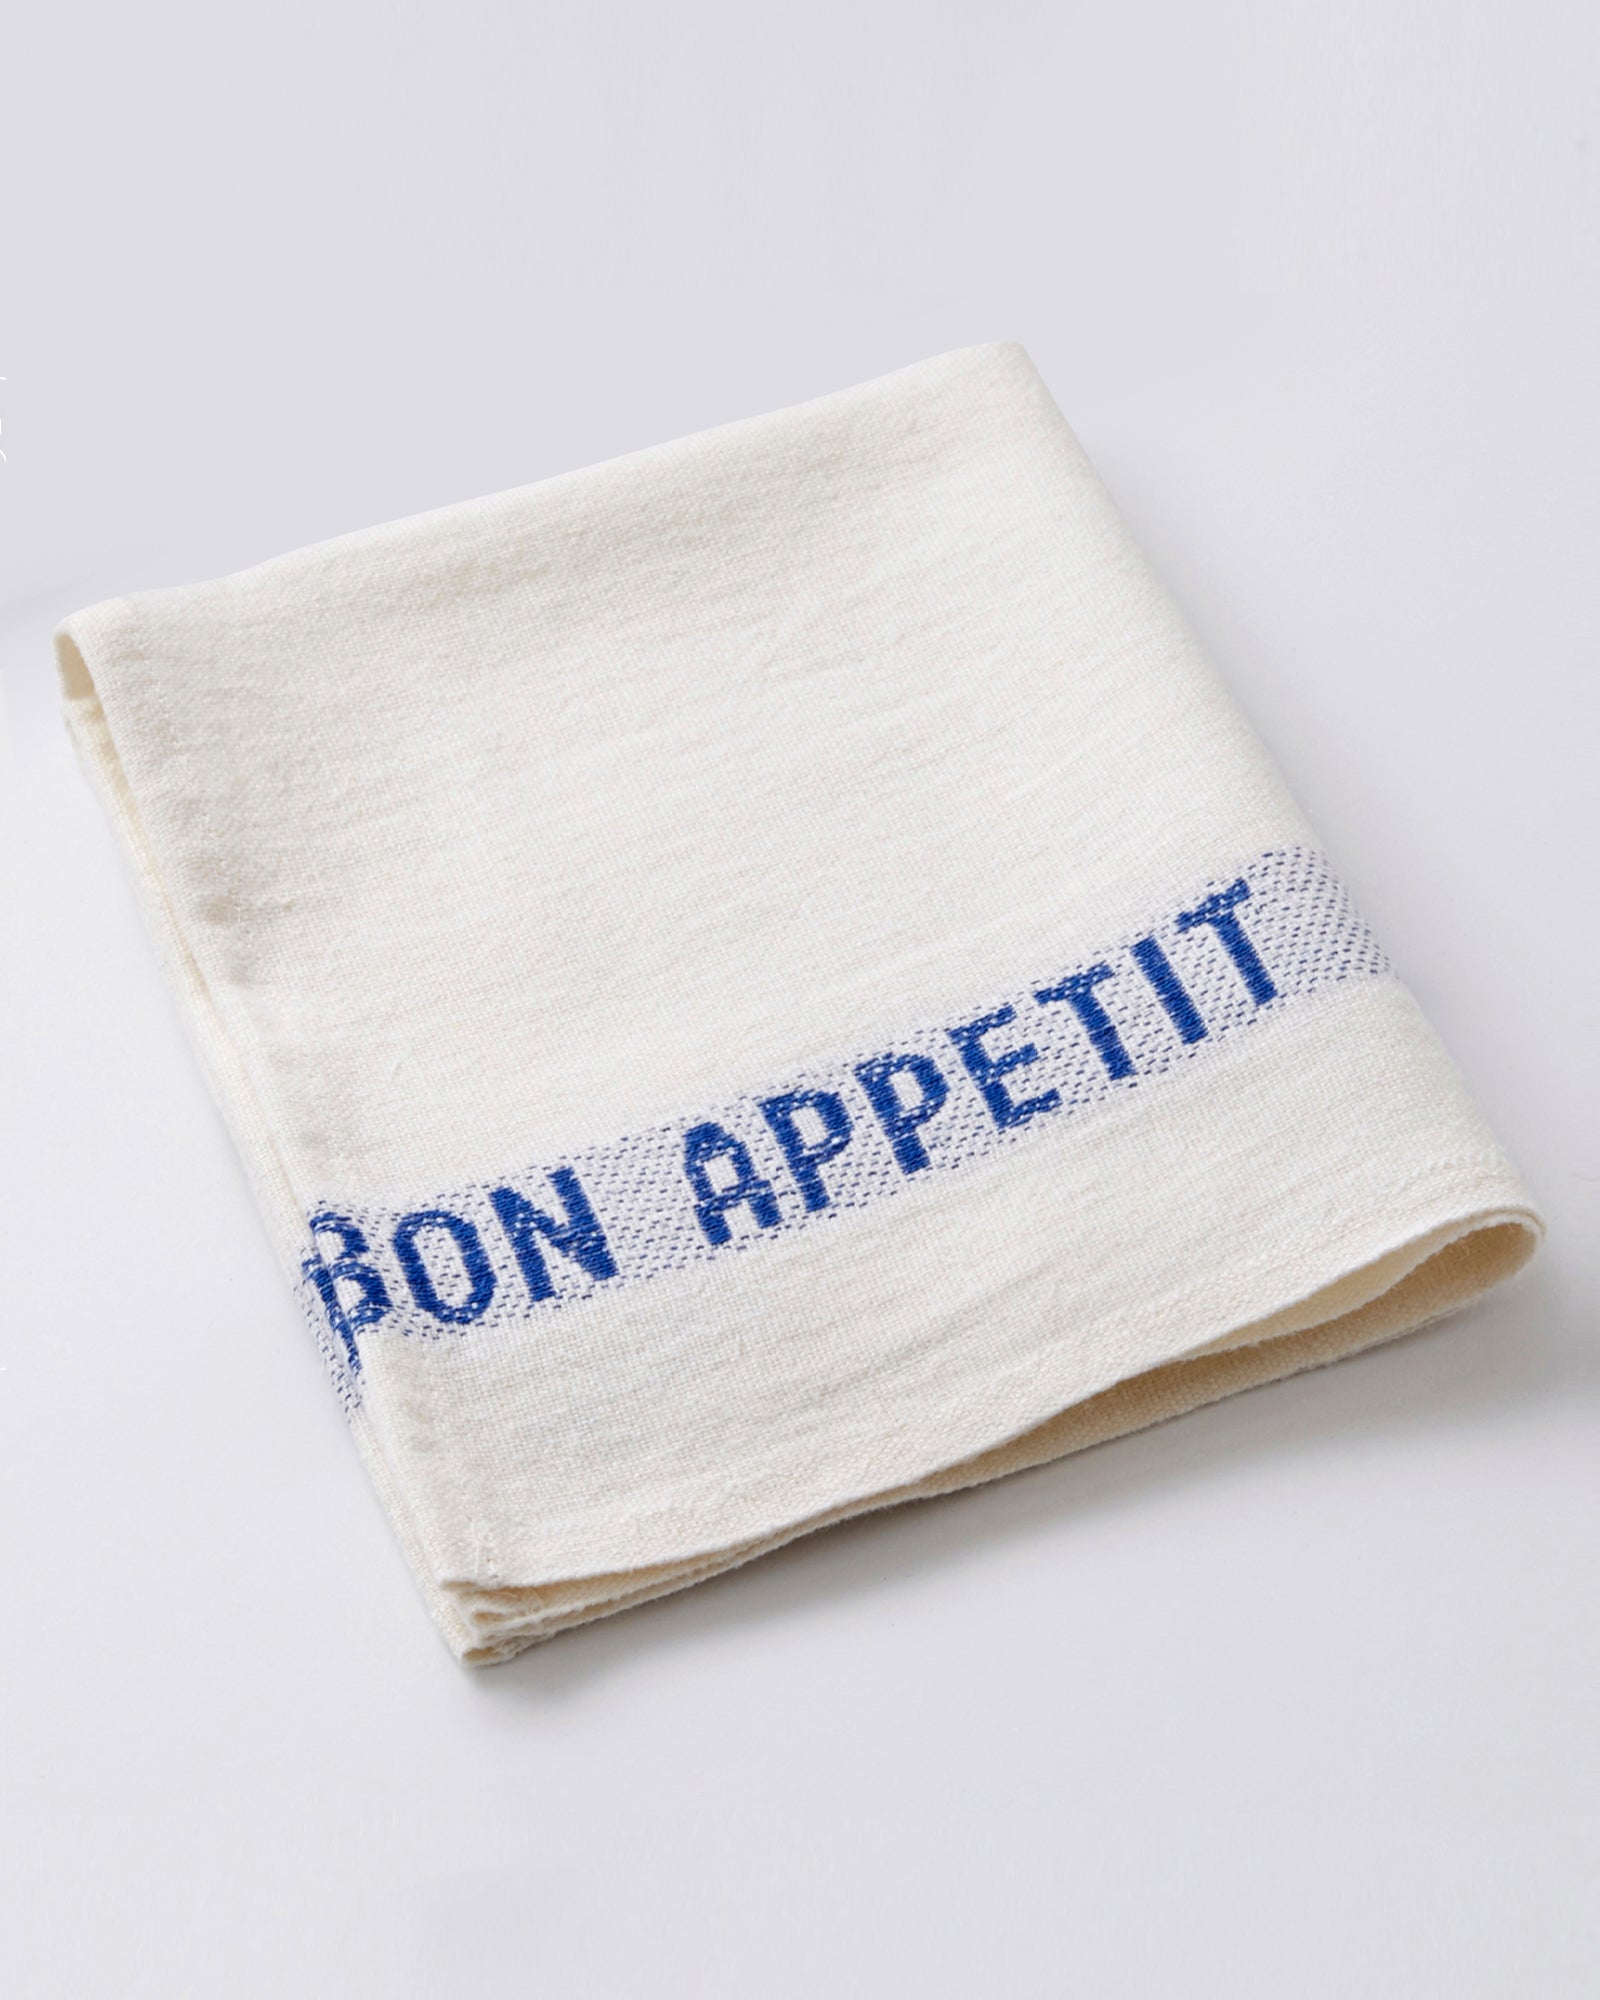 Bon Appetit Linen Napkins in White and Blue